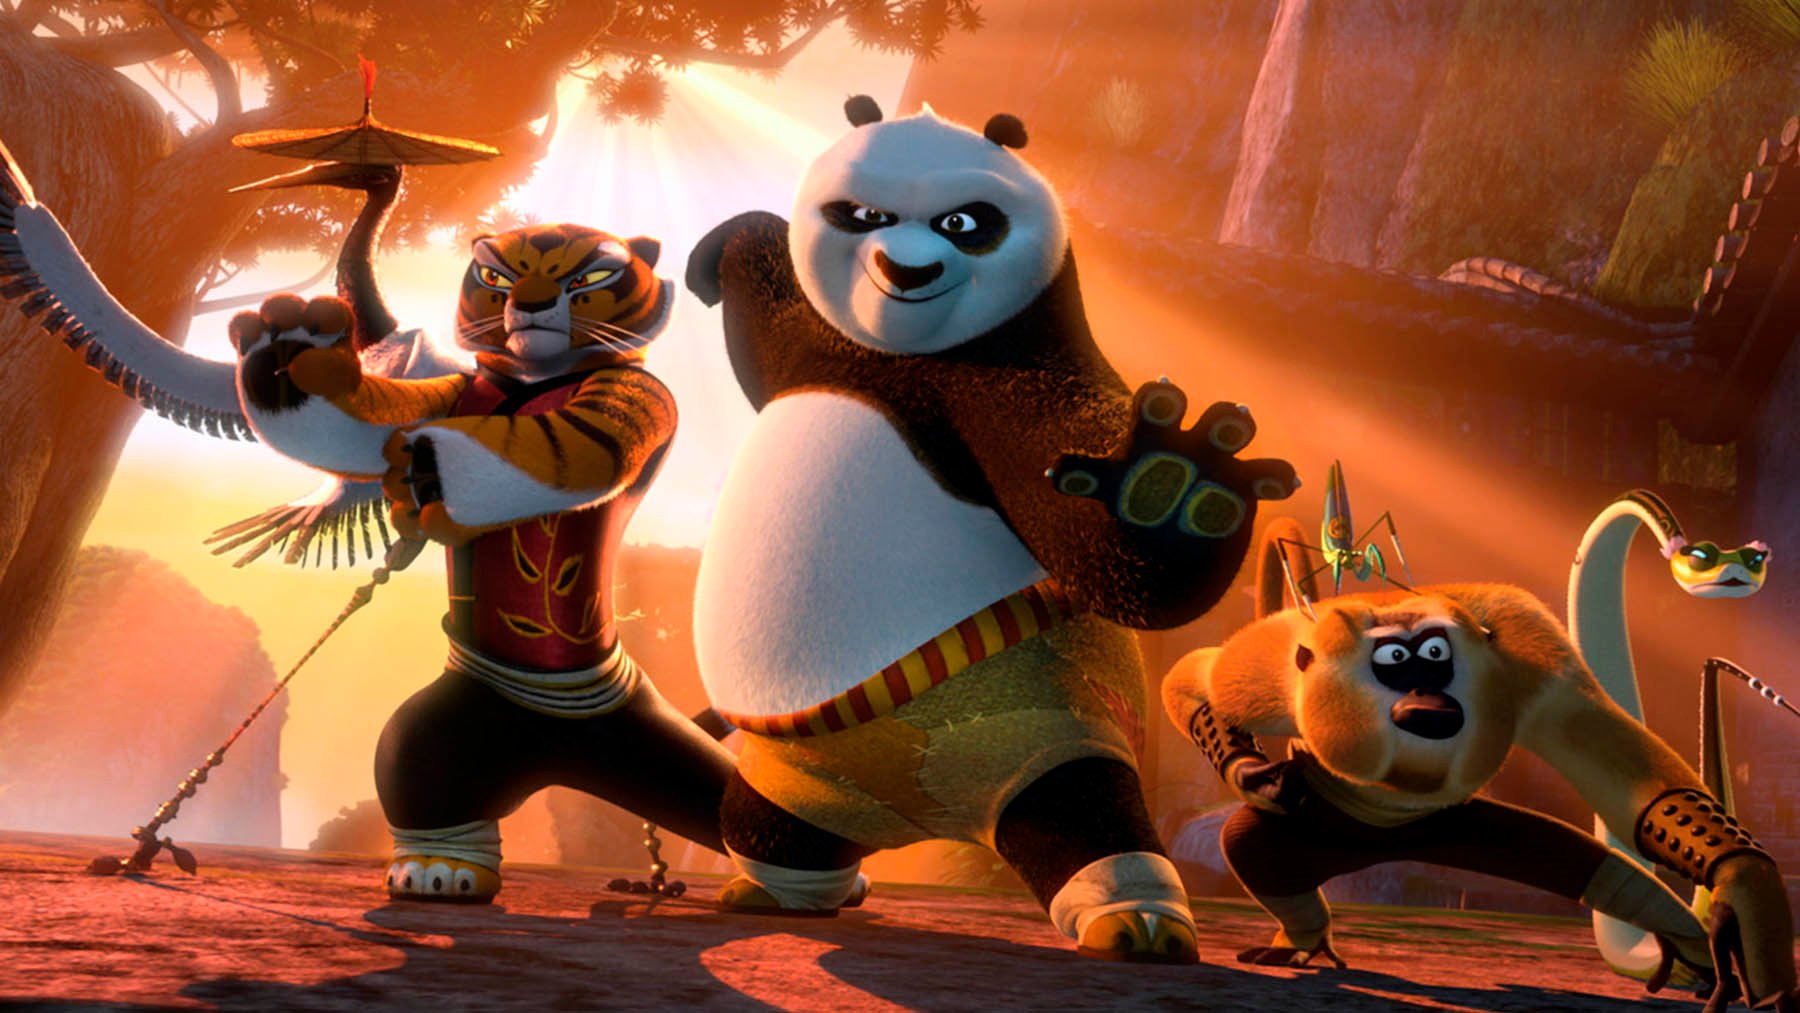 ‘Kung Fu Panda’ (Dreamworks)